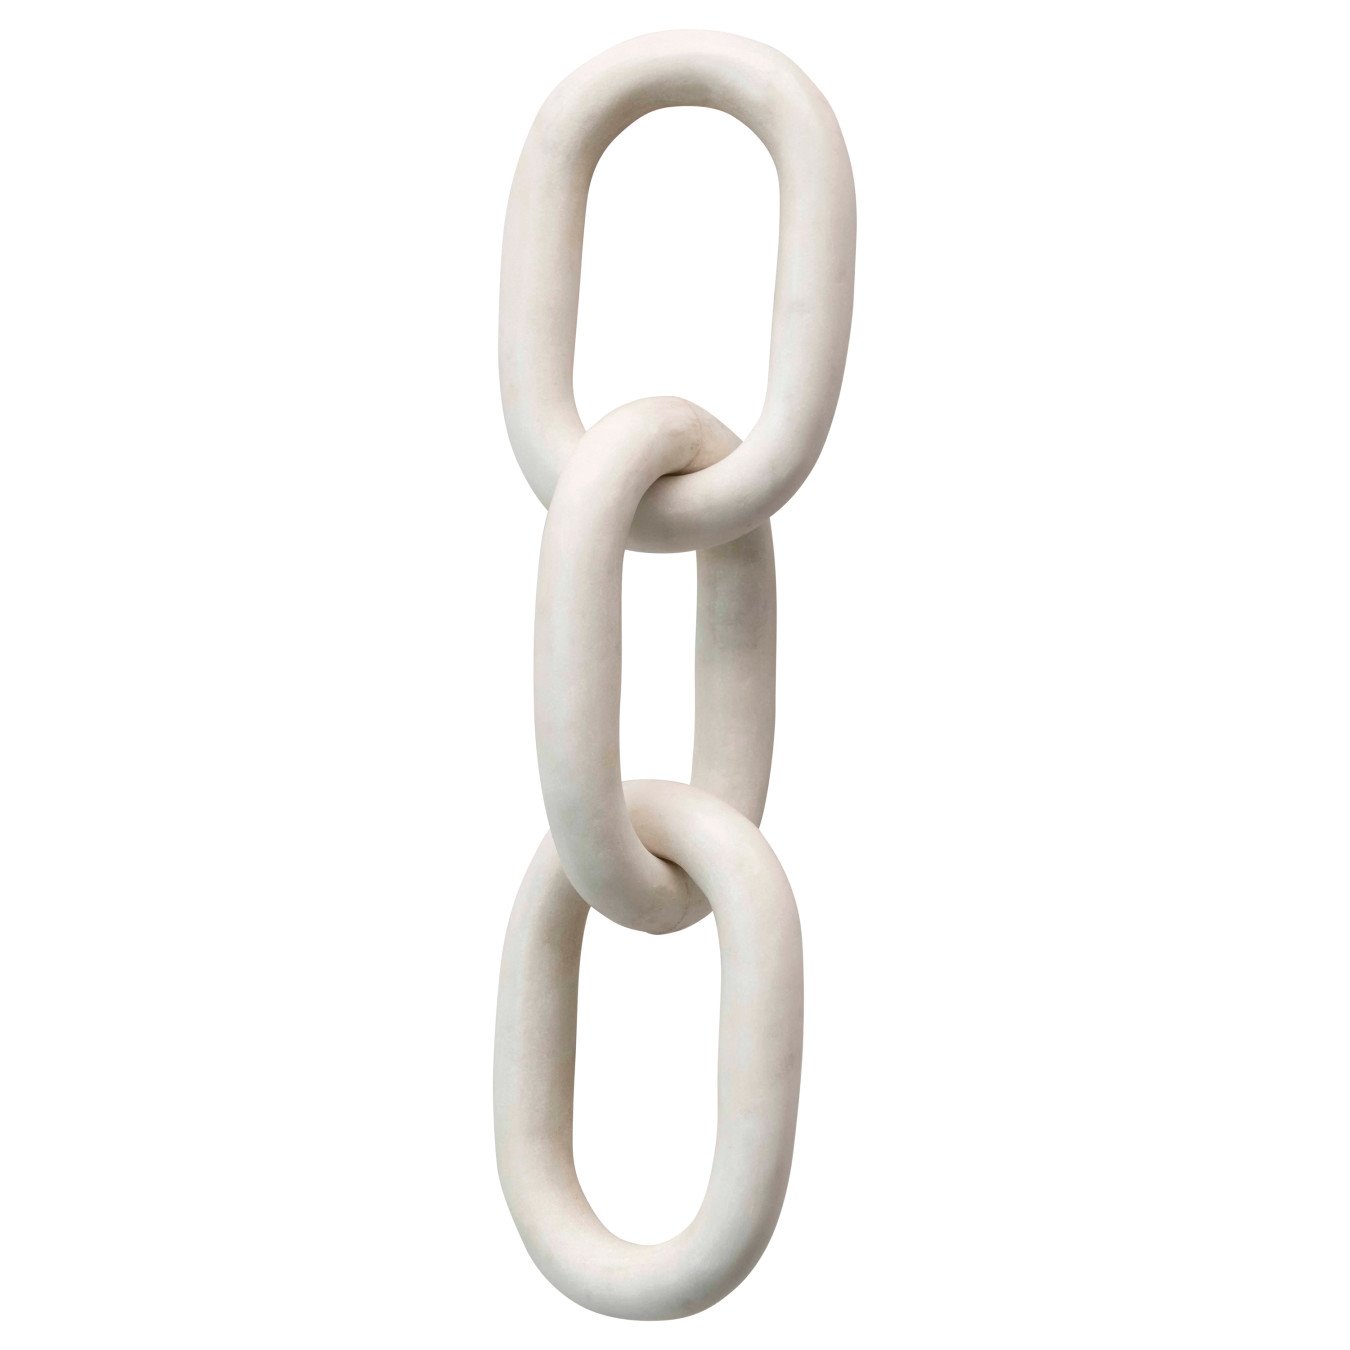 13"L Decorative Marble Chain Link Figurine